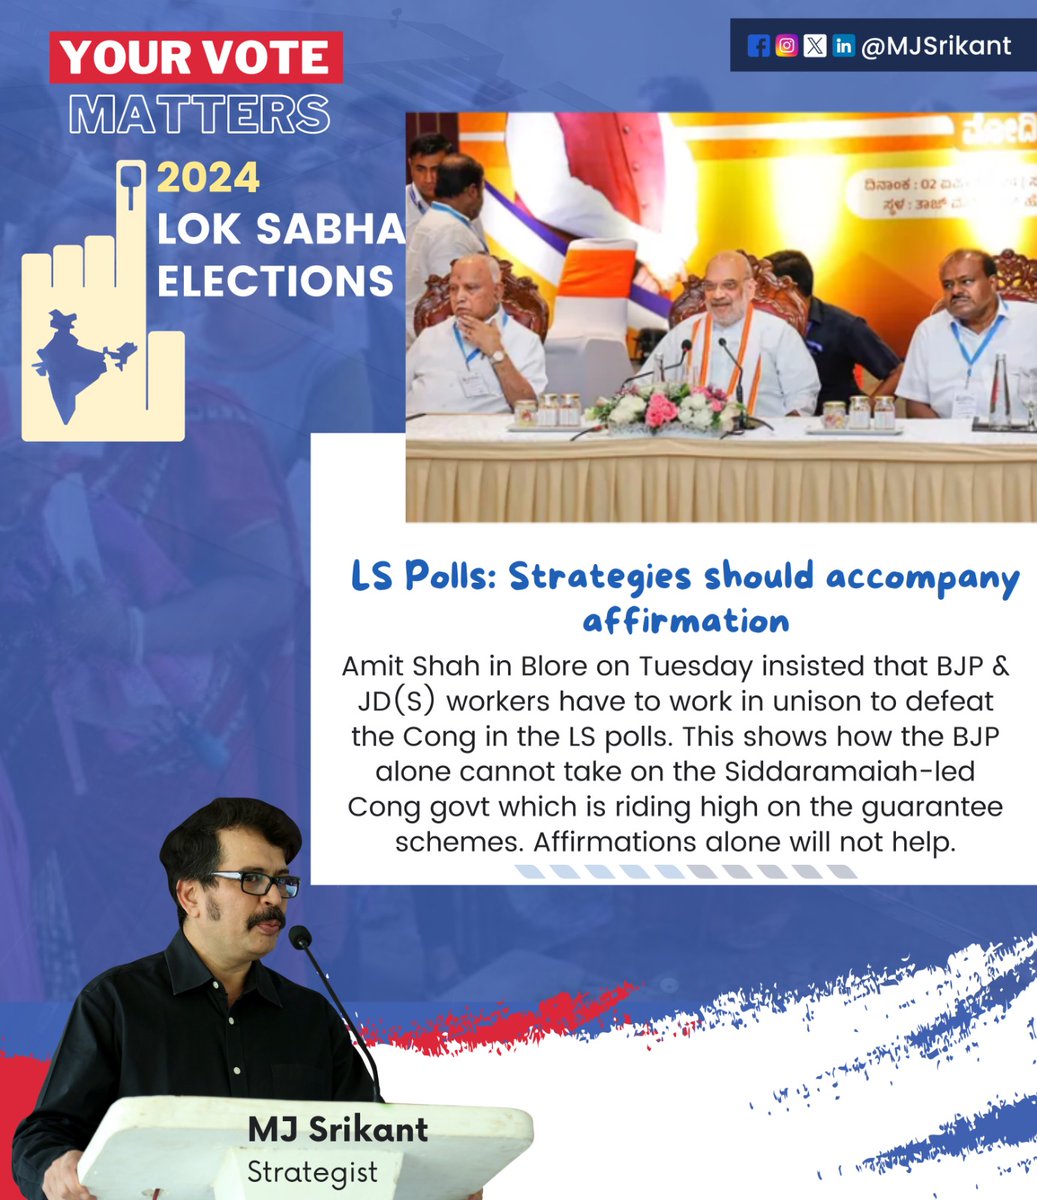 LS Polls: Strategies should accompany affirmation

#LSPolls #Strategies #Affirmation #AmitShah #Blore #BJP #JDS #Unity #DefeatCongress #Siddaramaiah #GuaranteeSchemes #WorkTogether